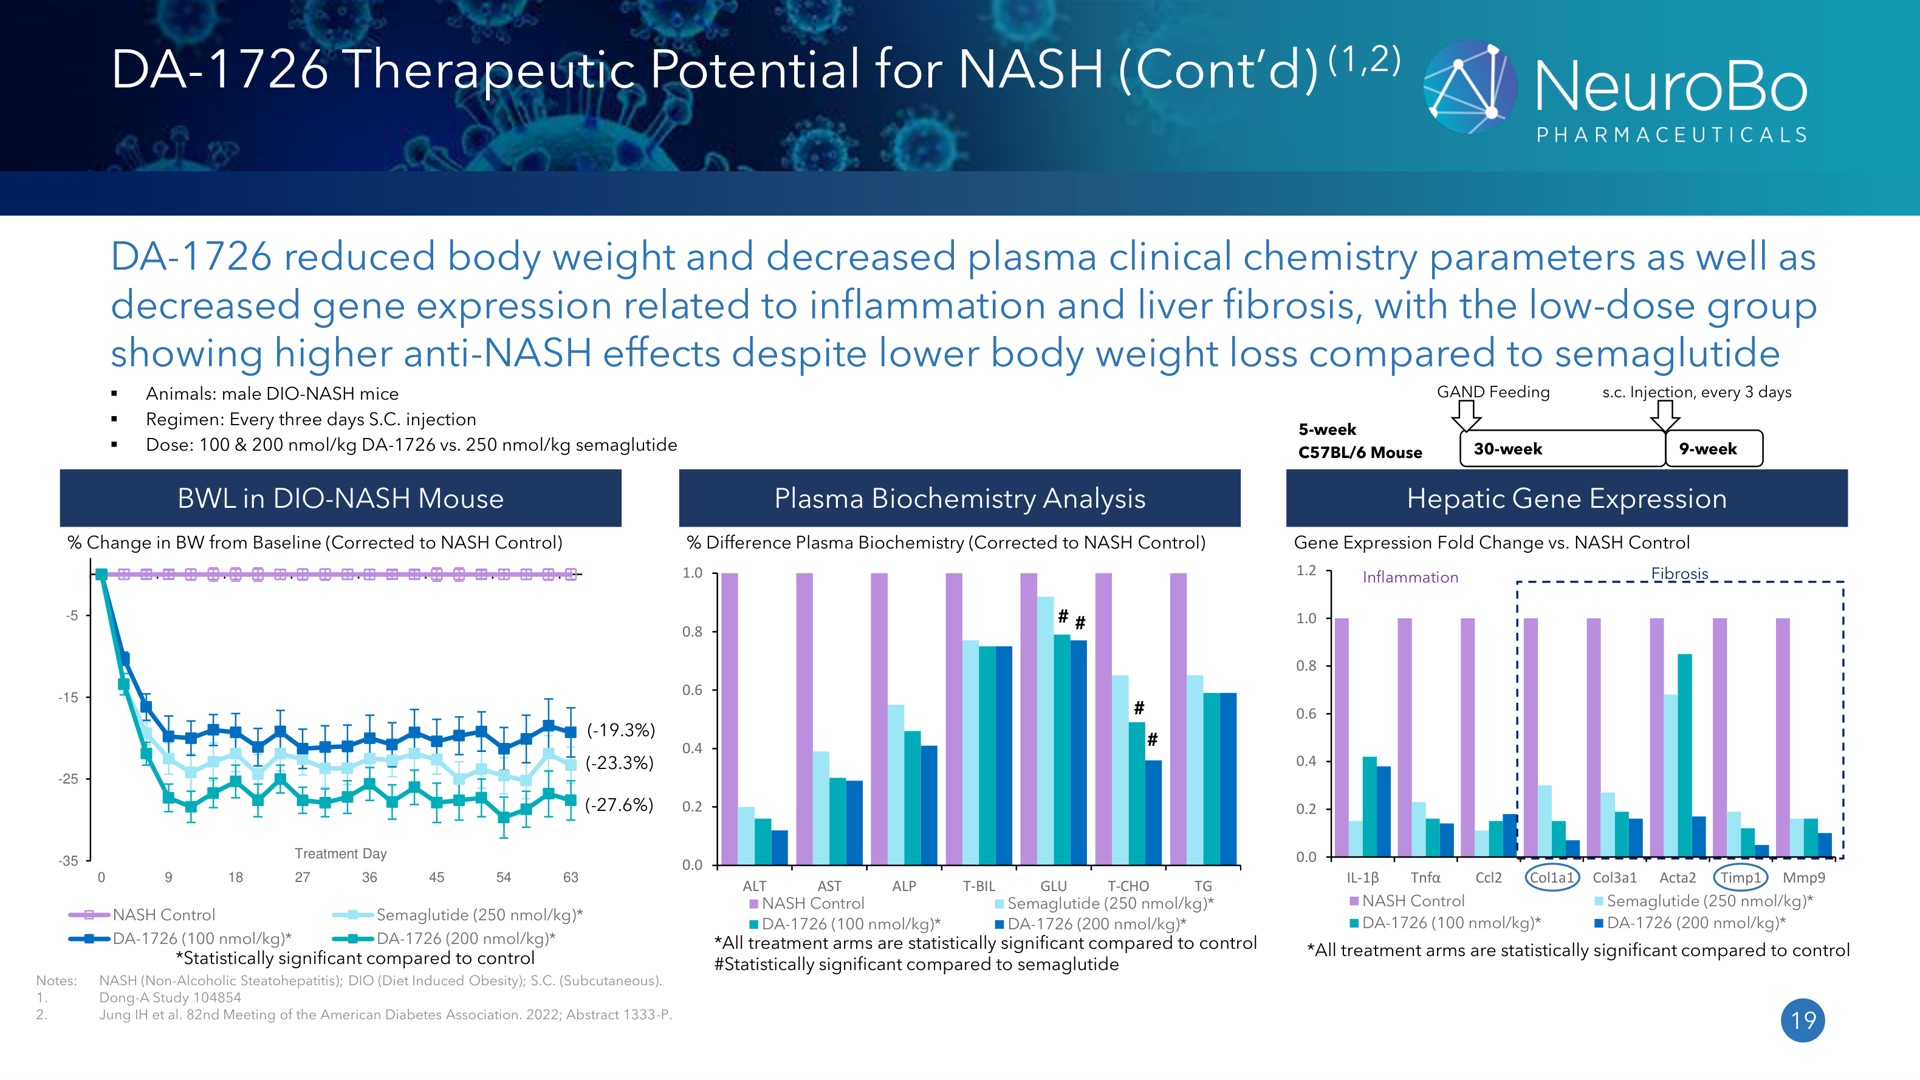 therapeutic potential for nash | NeuroBo Pharmaceuticals